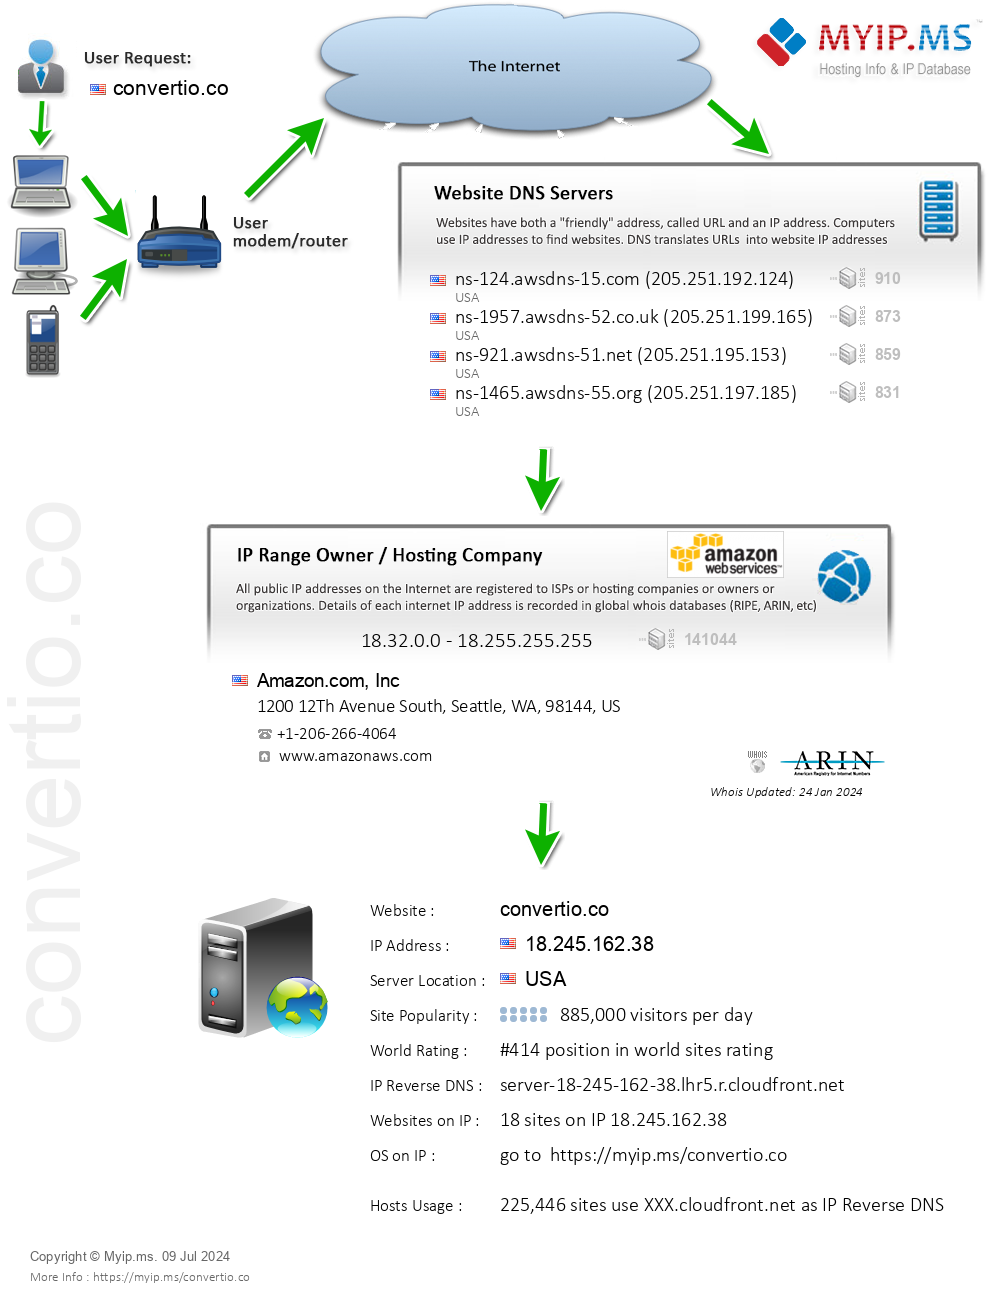 Convertio.co - Website Hosting Visual IP Diagram